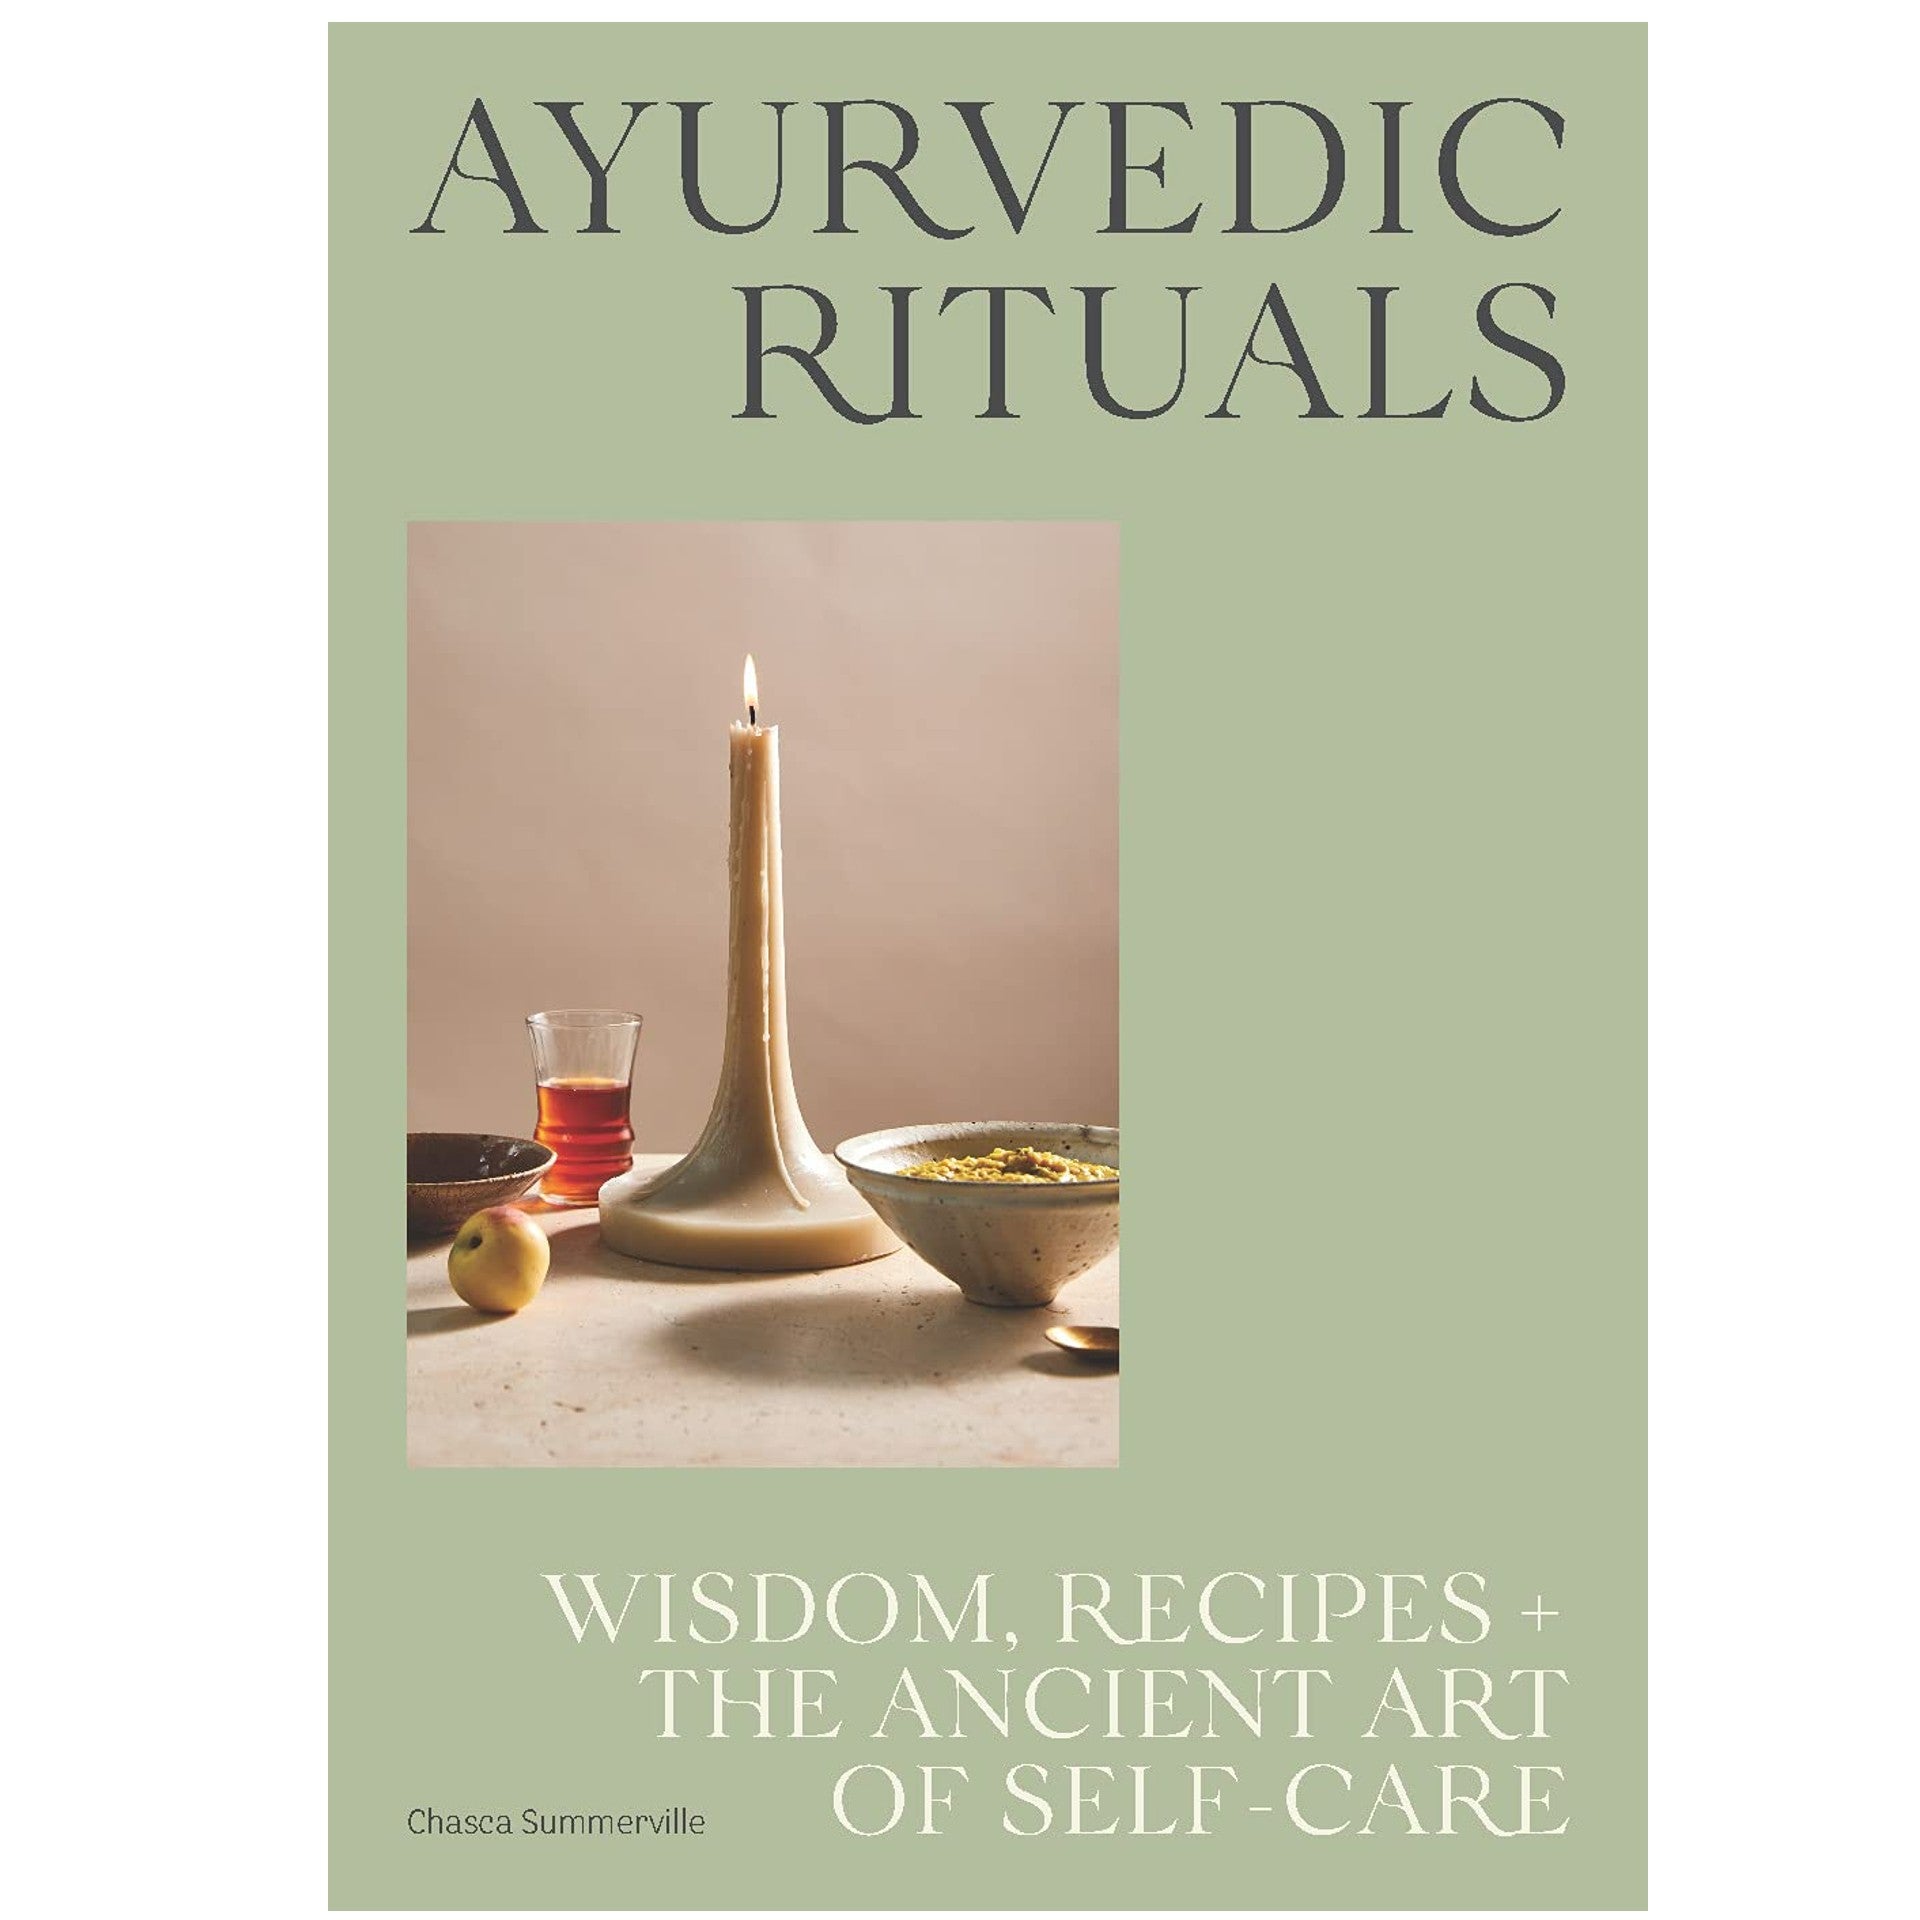 Ayurvedic Rituals